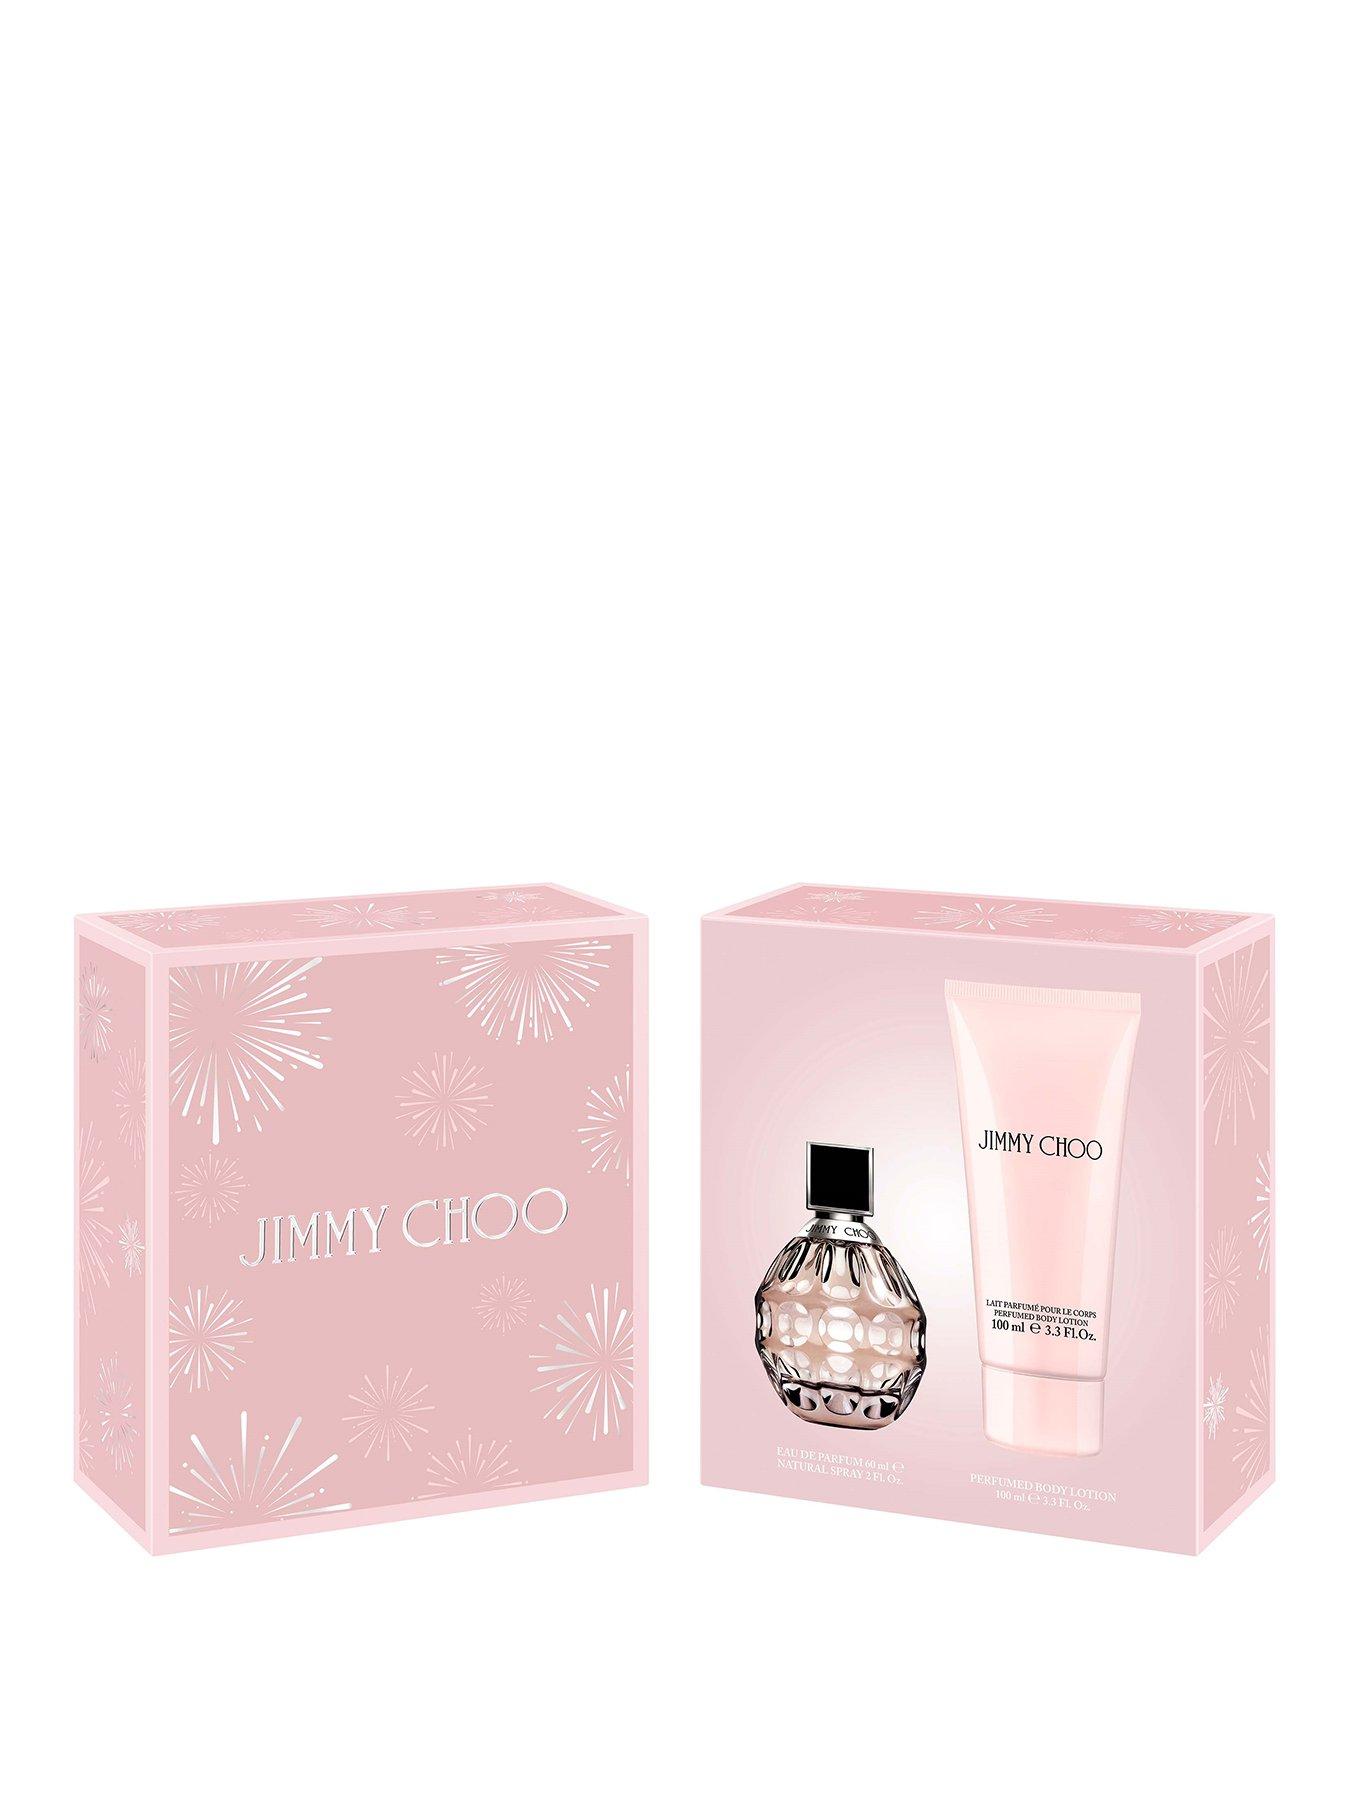 Jimmy Choo ORIGINAL Eau de Parfum 60ml and Body Lotion 100ml Plastic ...